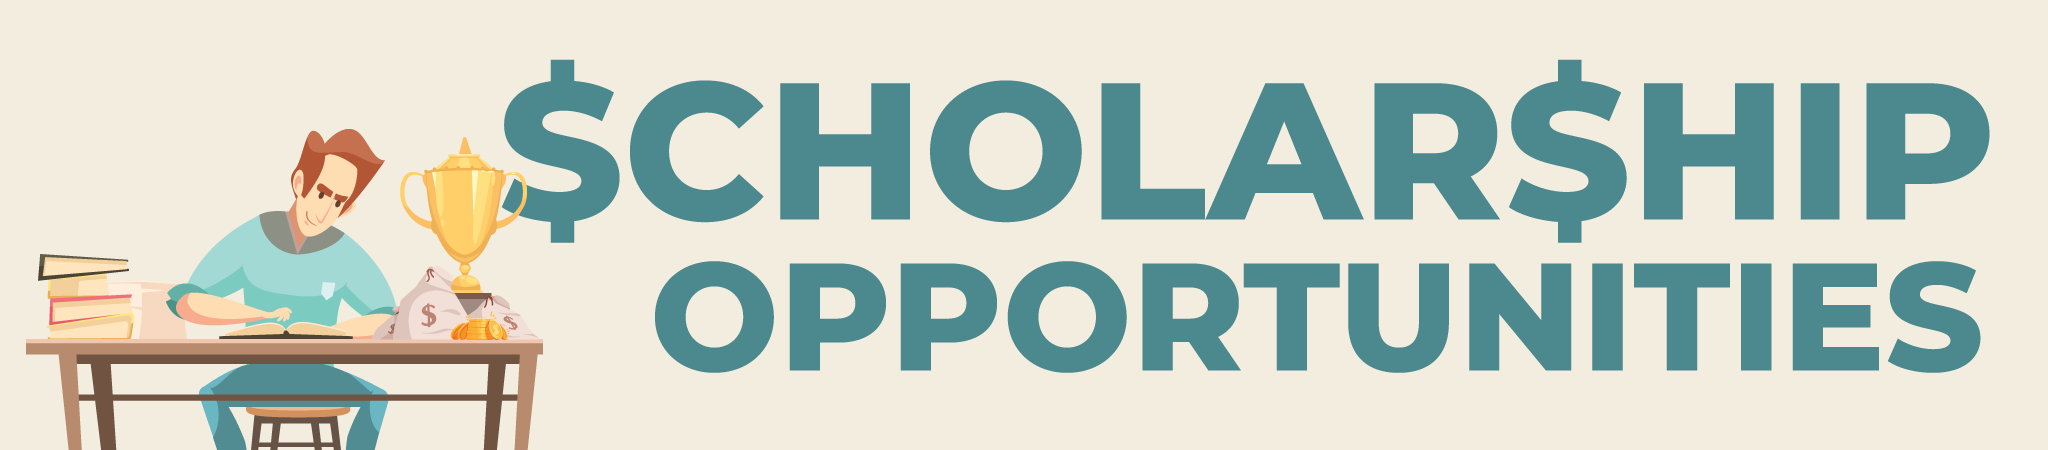 Banner of Scholarship Opportunities